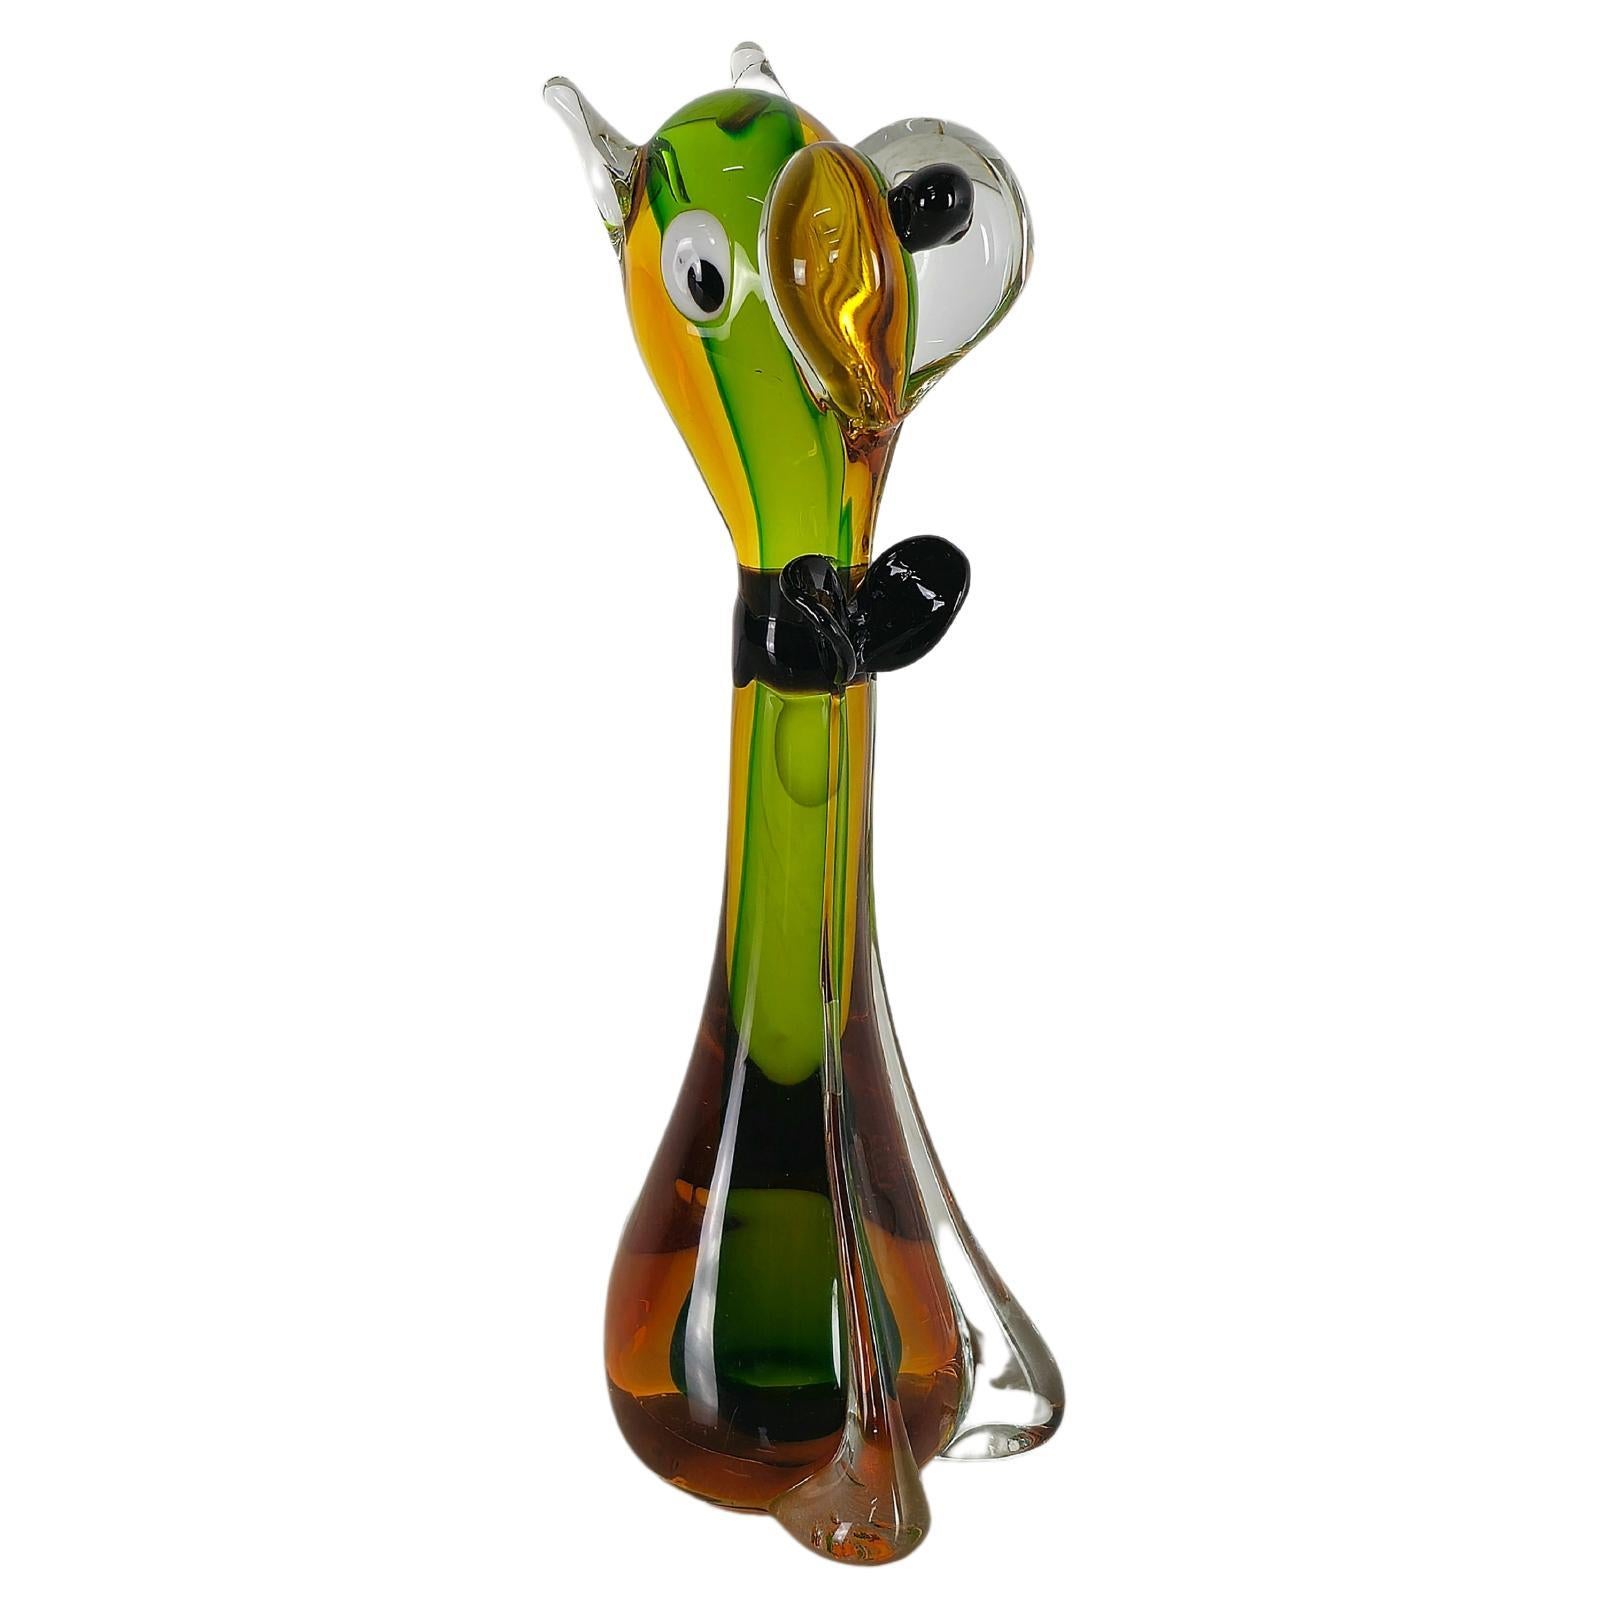 Decorative Object Animal Sculpture Dog Murano Glass Midcentury Modern Italy 1960